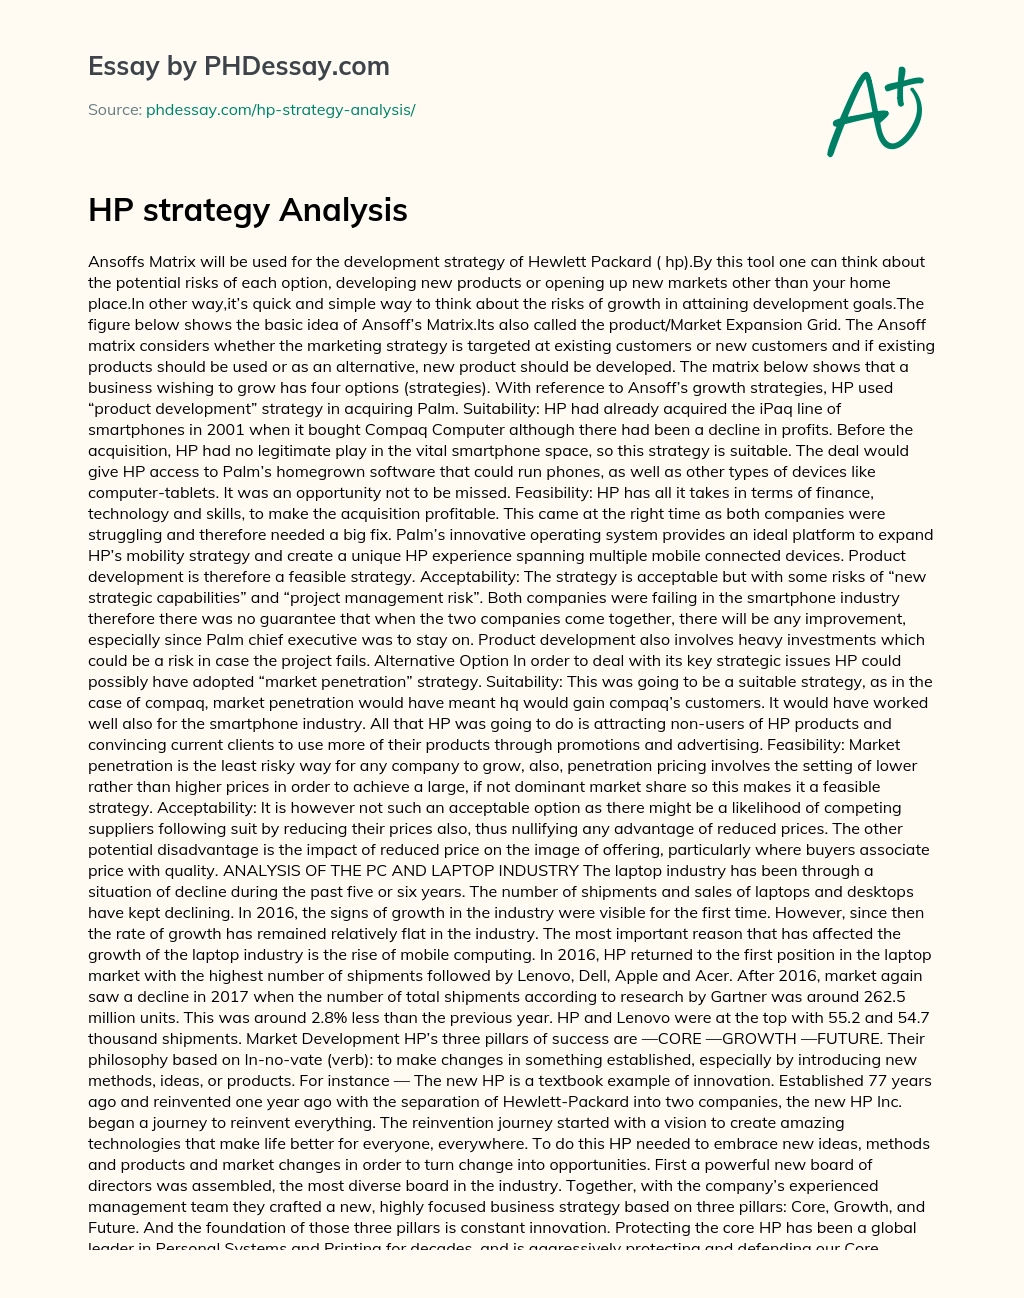 HP Strategy Analysis essay